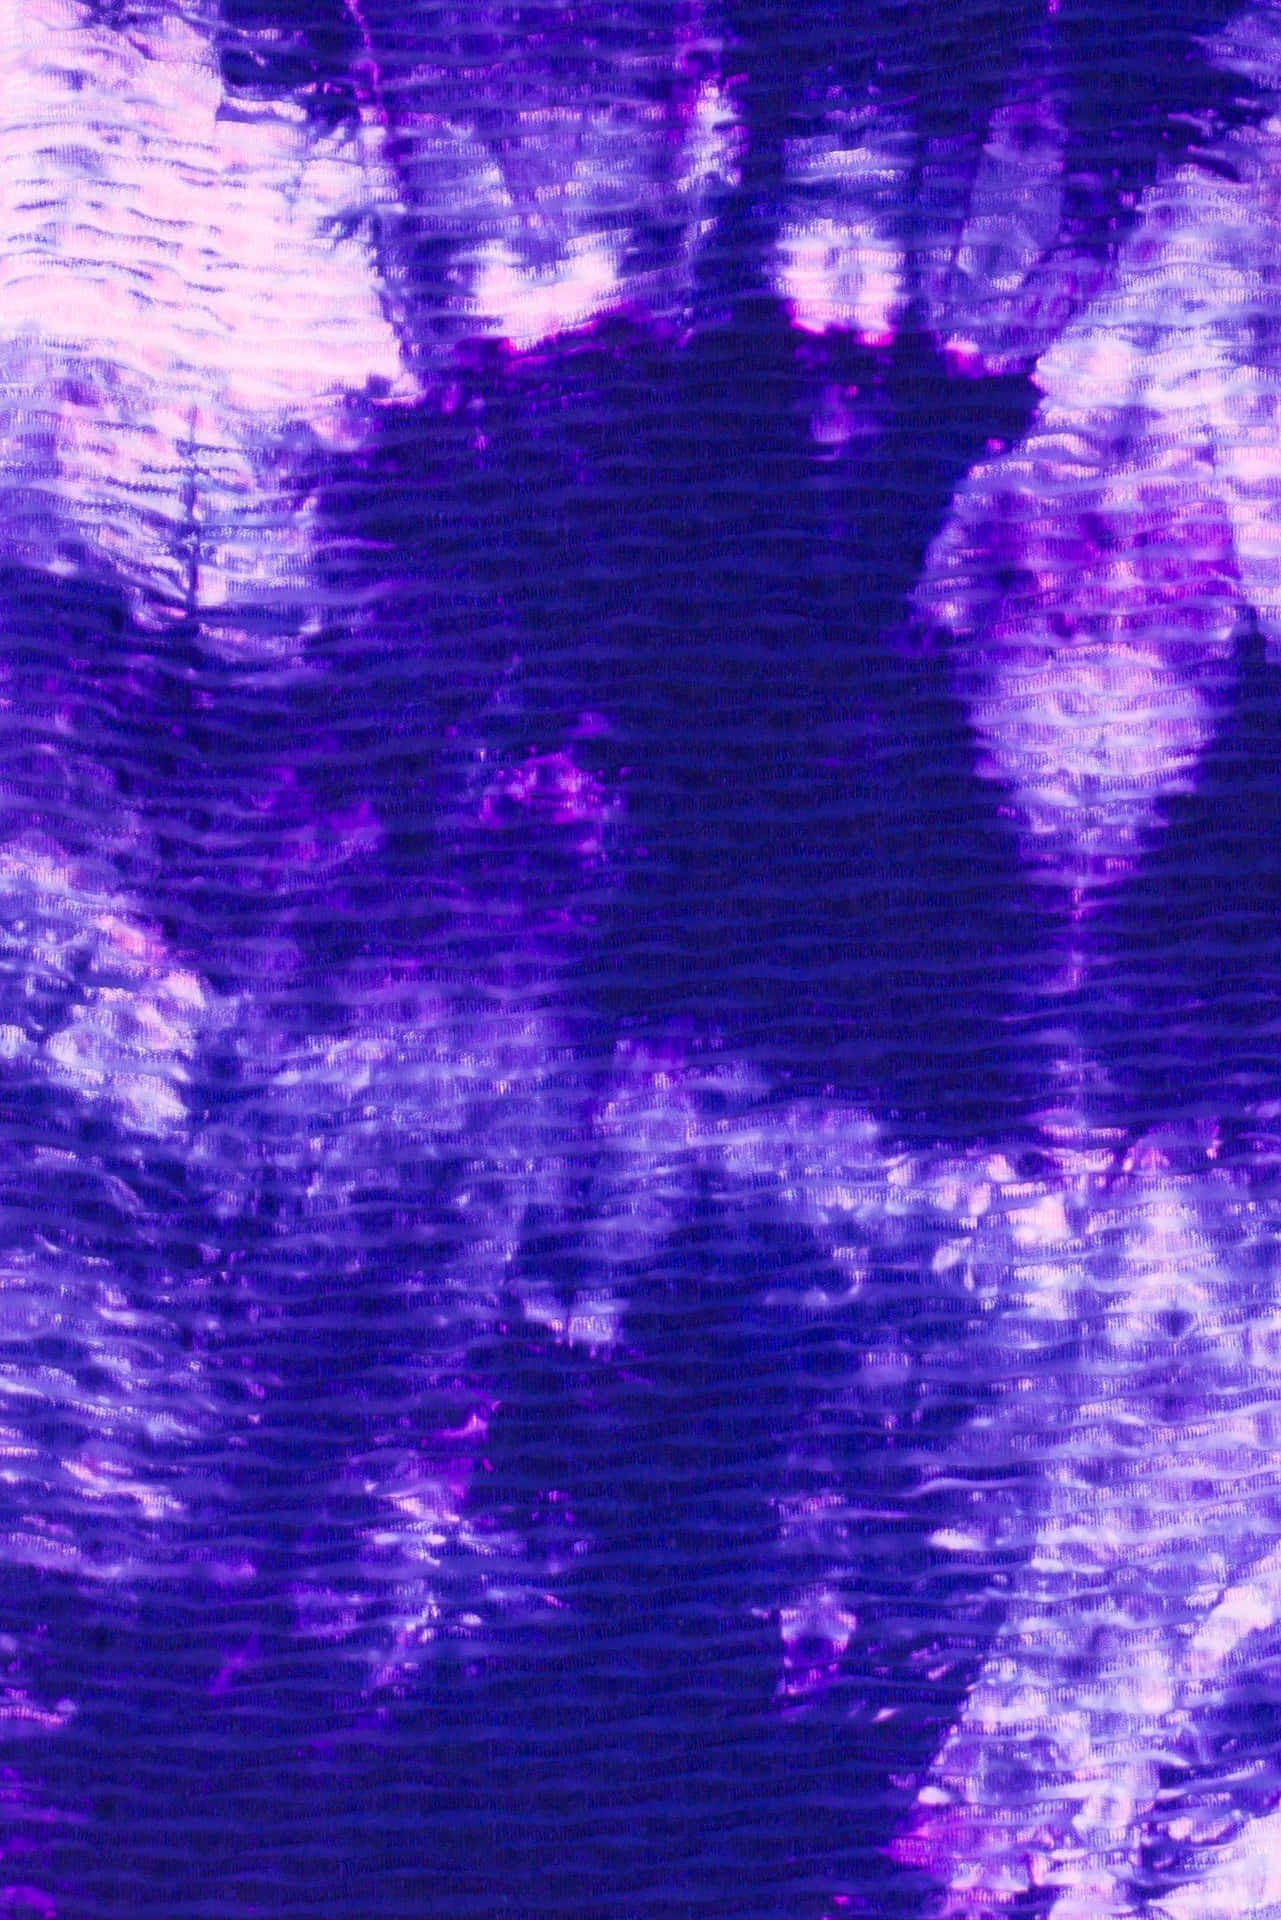 Einabstrakter Batik-hintergrund In Lila Tönen. Wallpaper